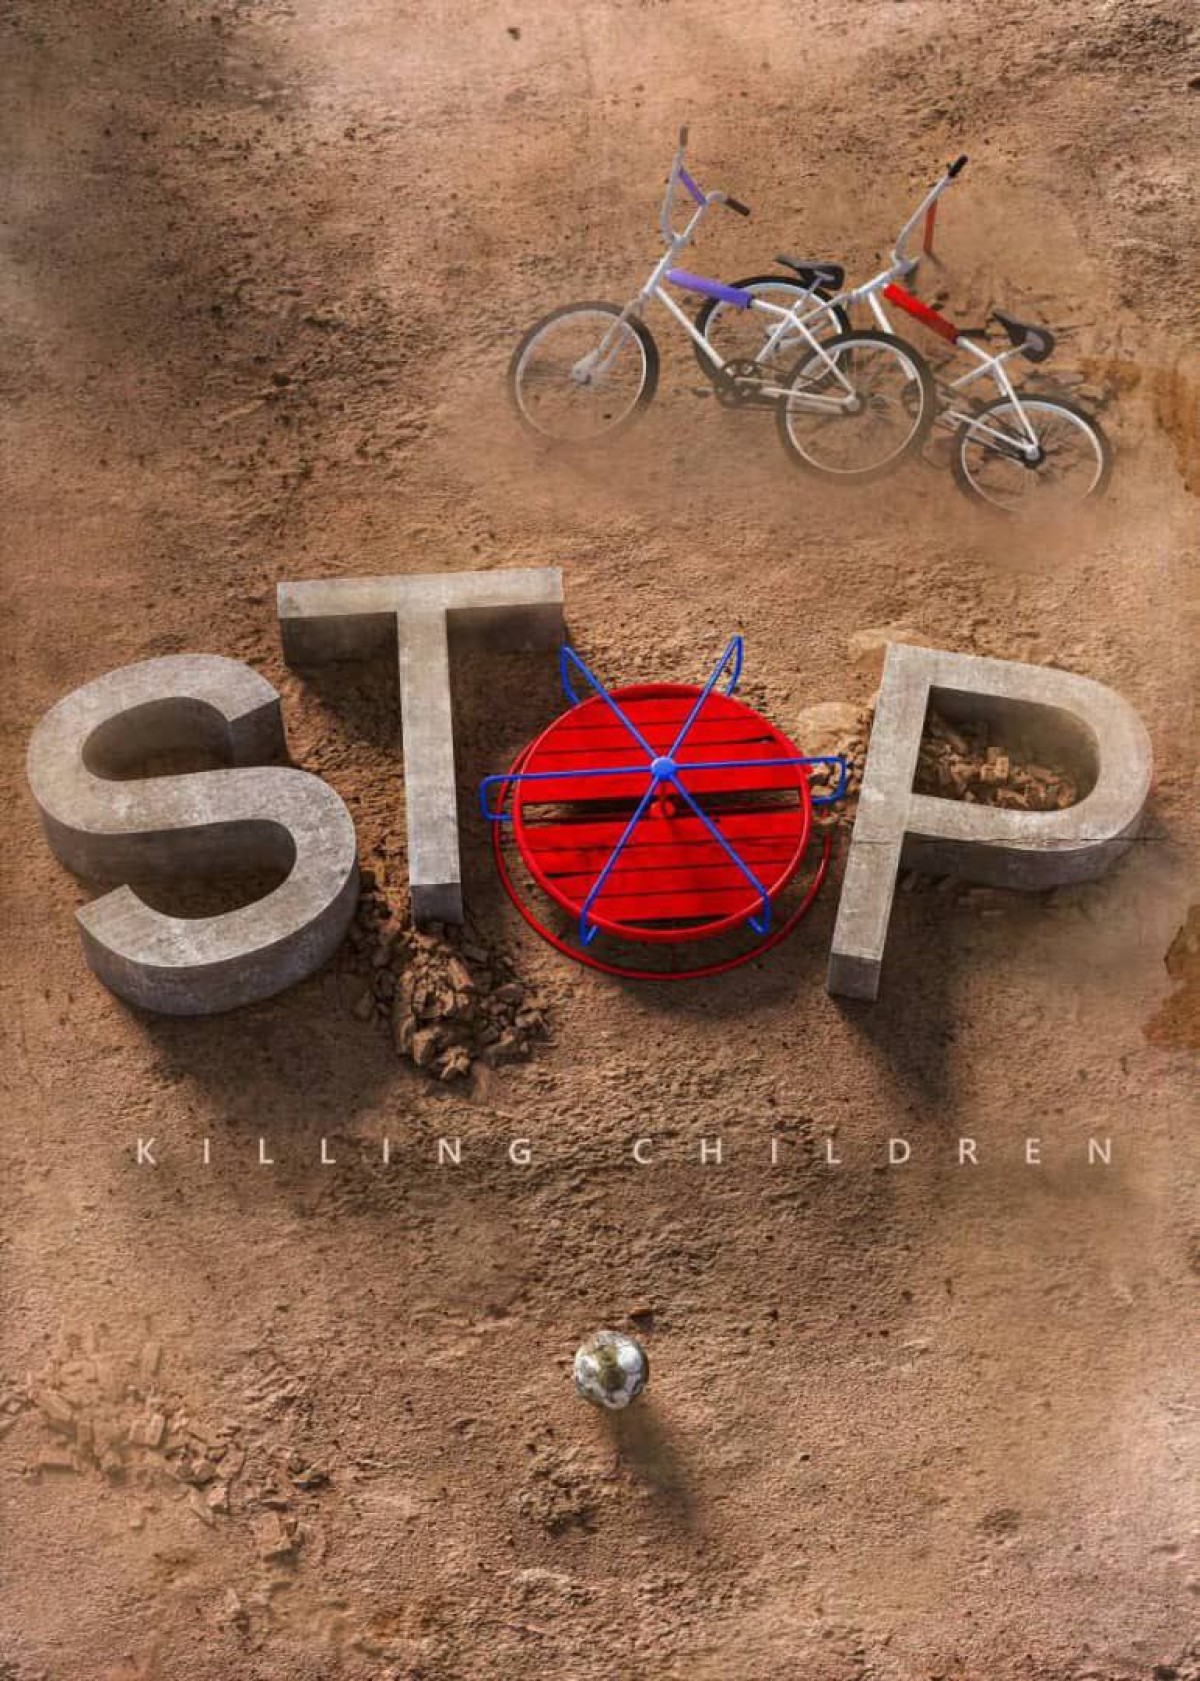 STOP KILLING CHILDREN 1